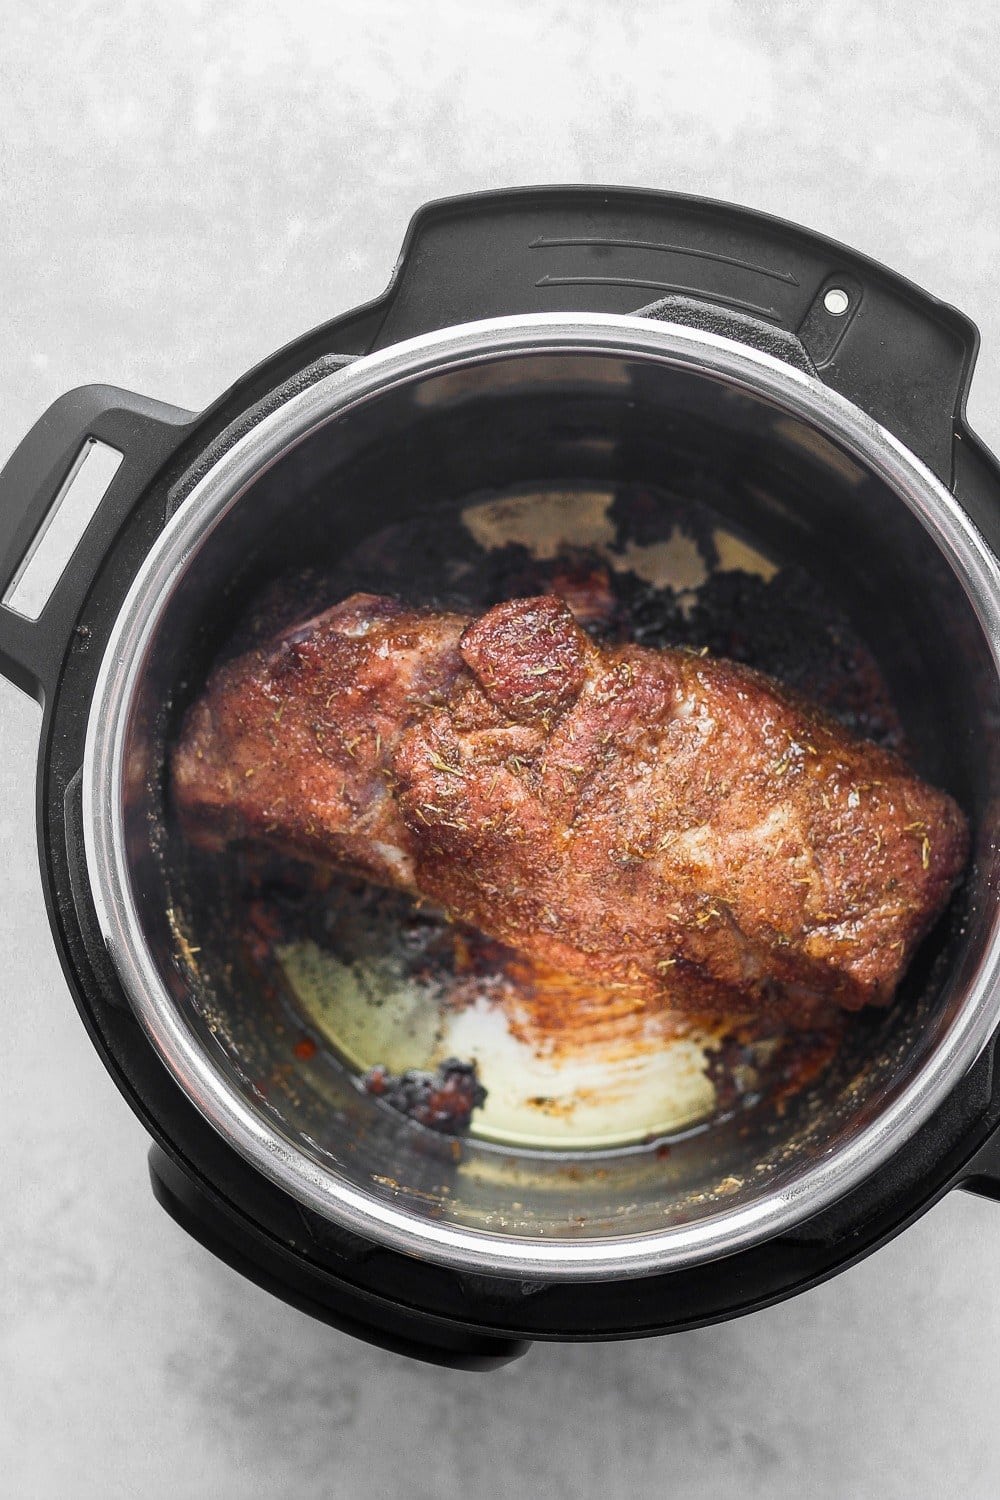 searing pork roast in instant pot.